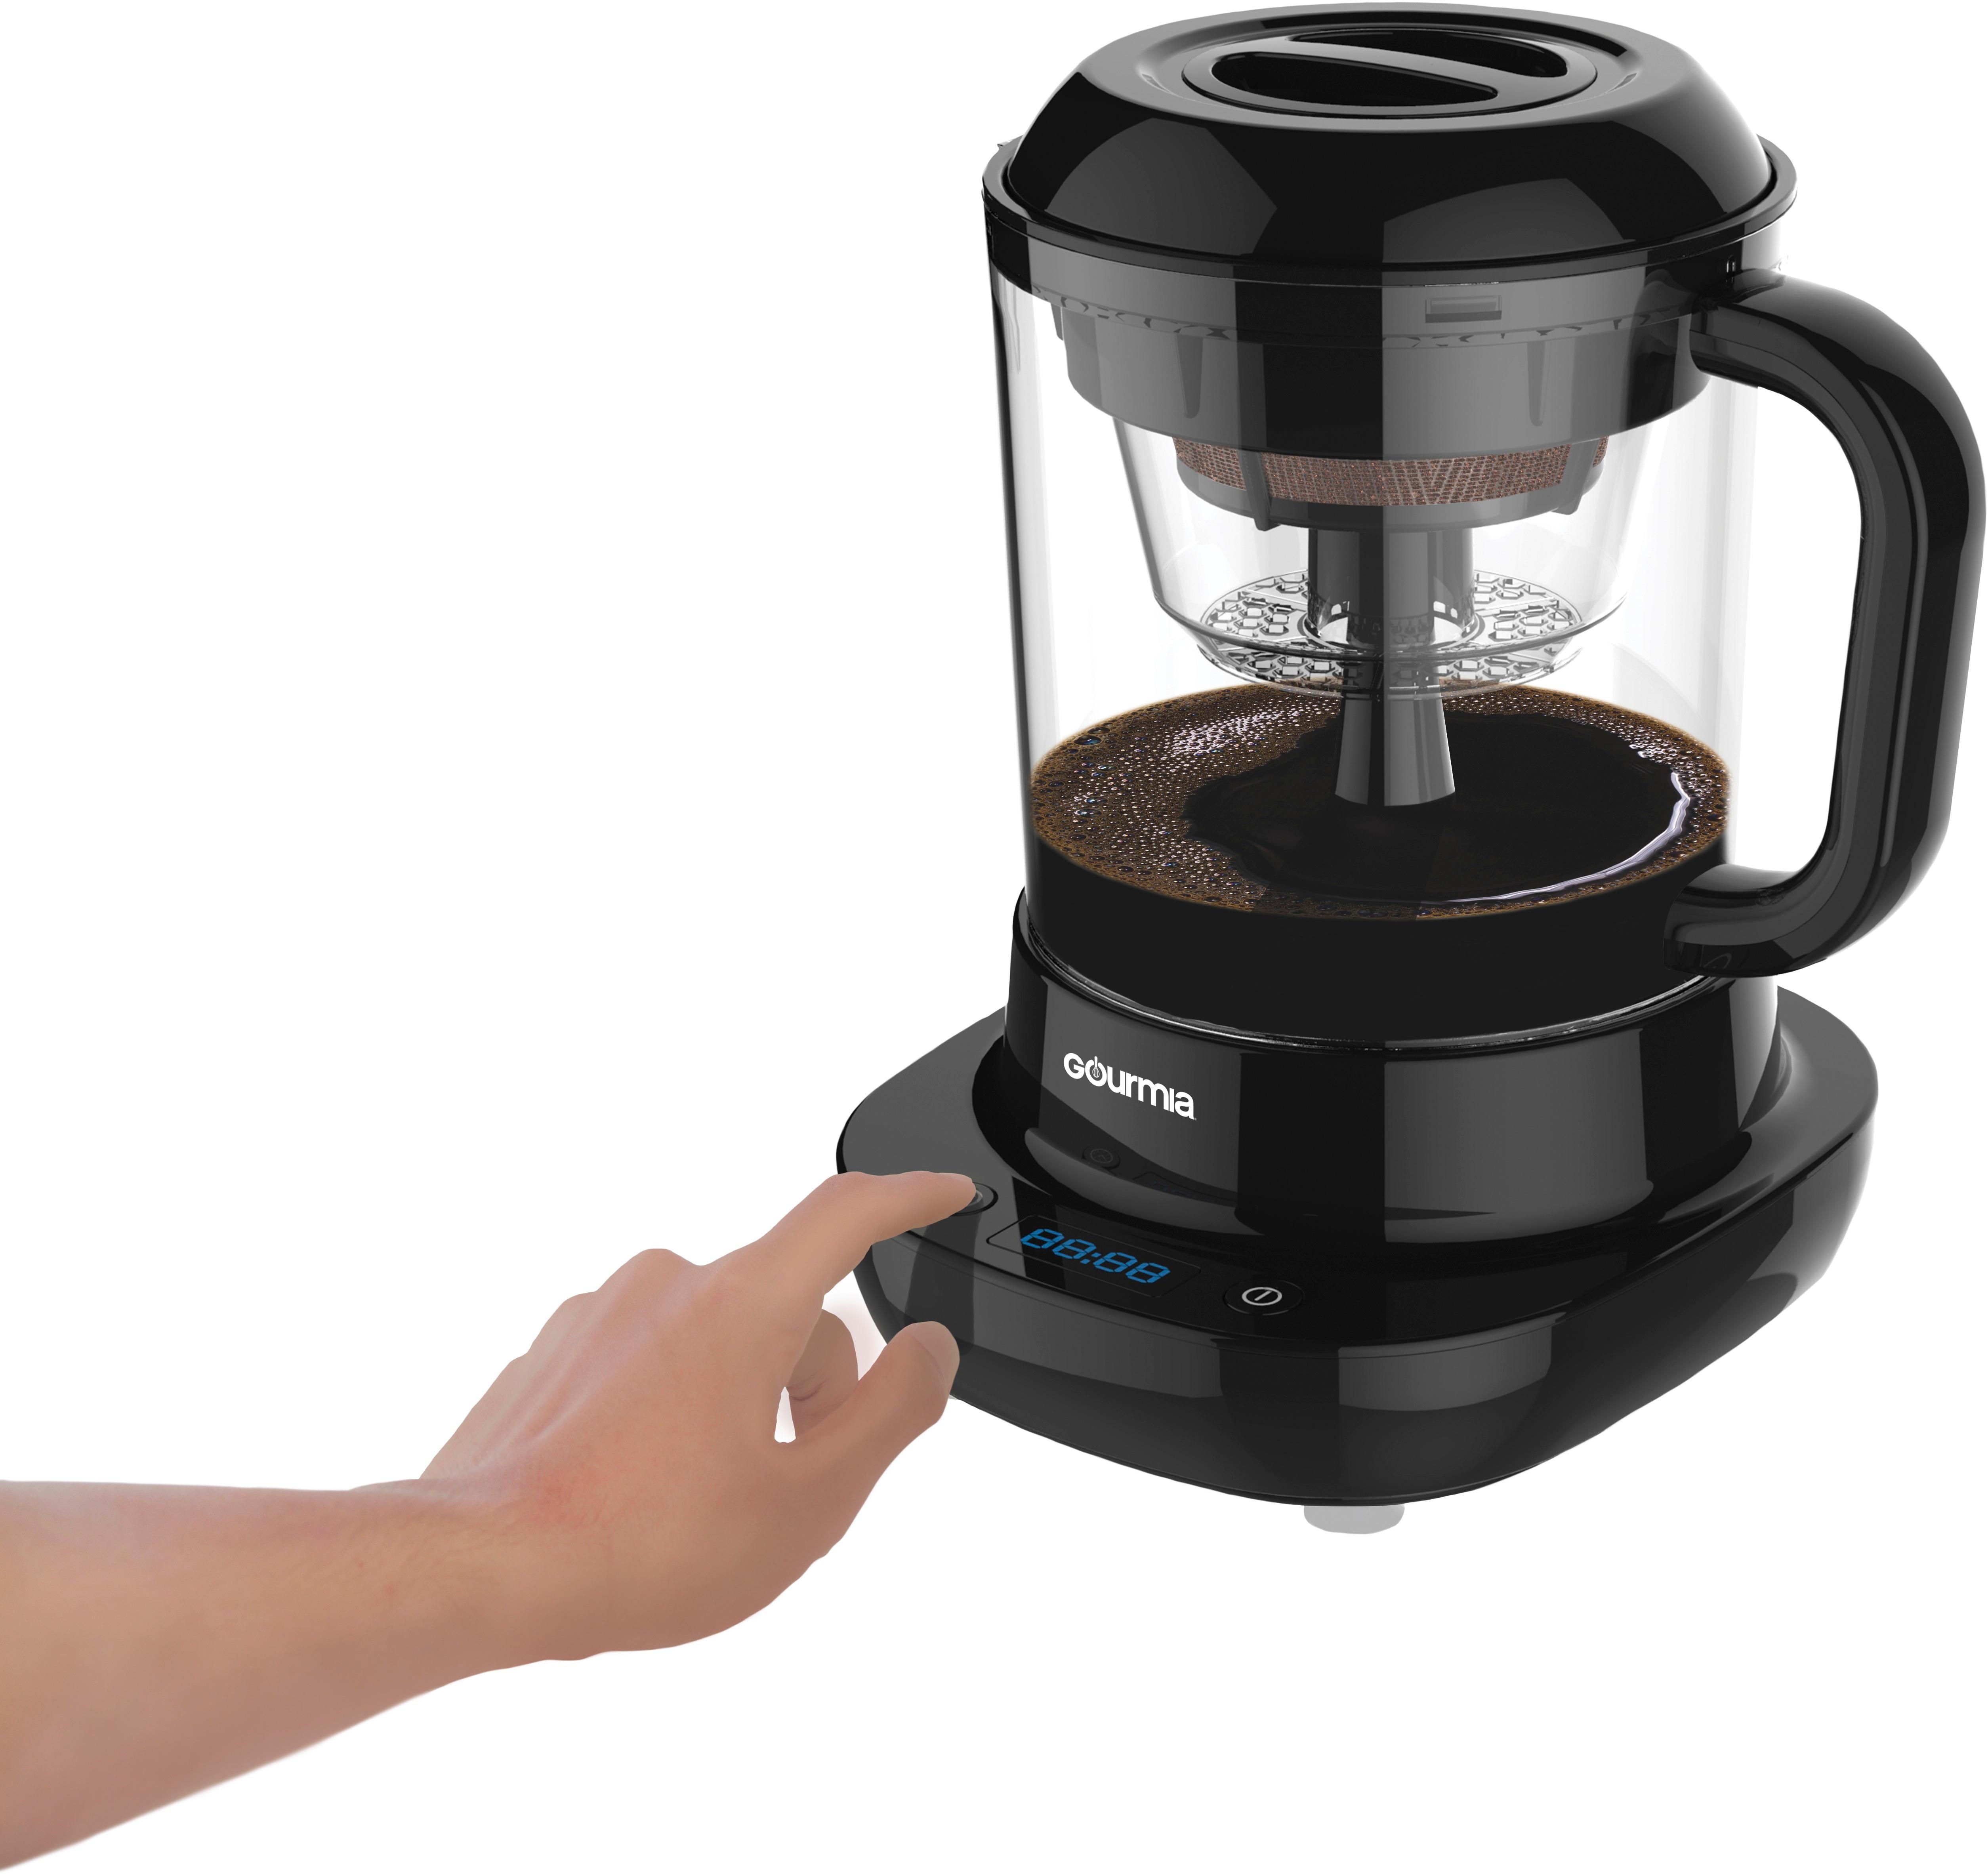 Commercial Cold Brew Coffee Maker (15 Gallon)